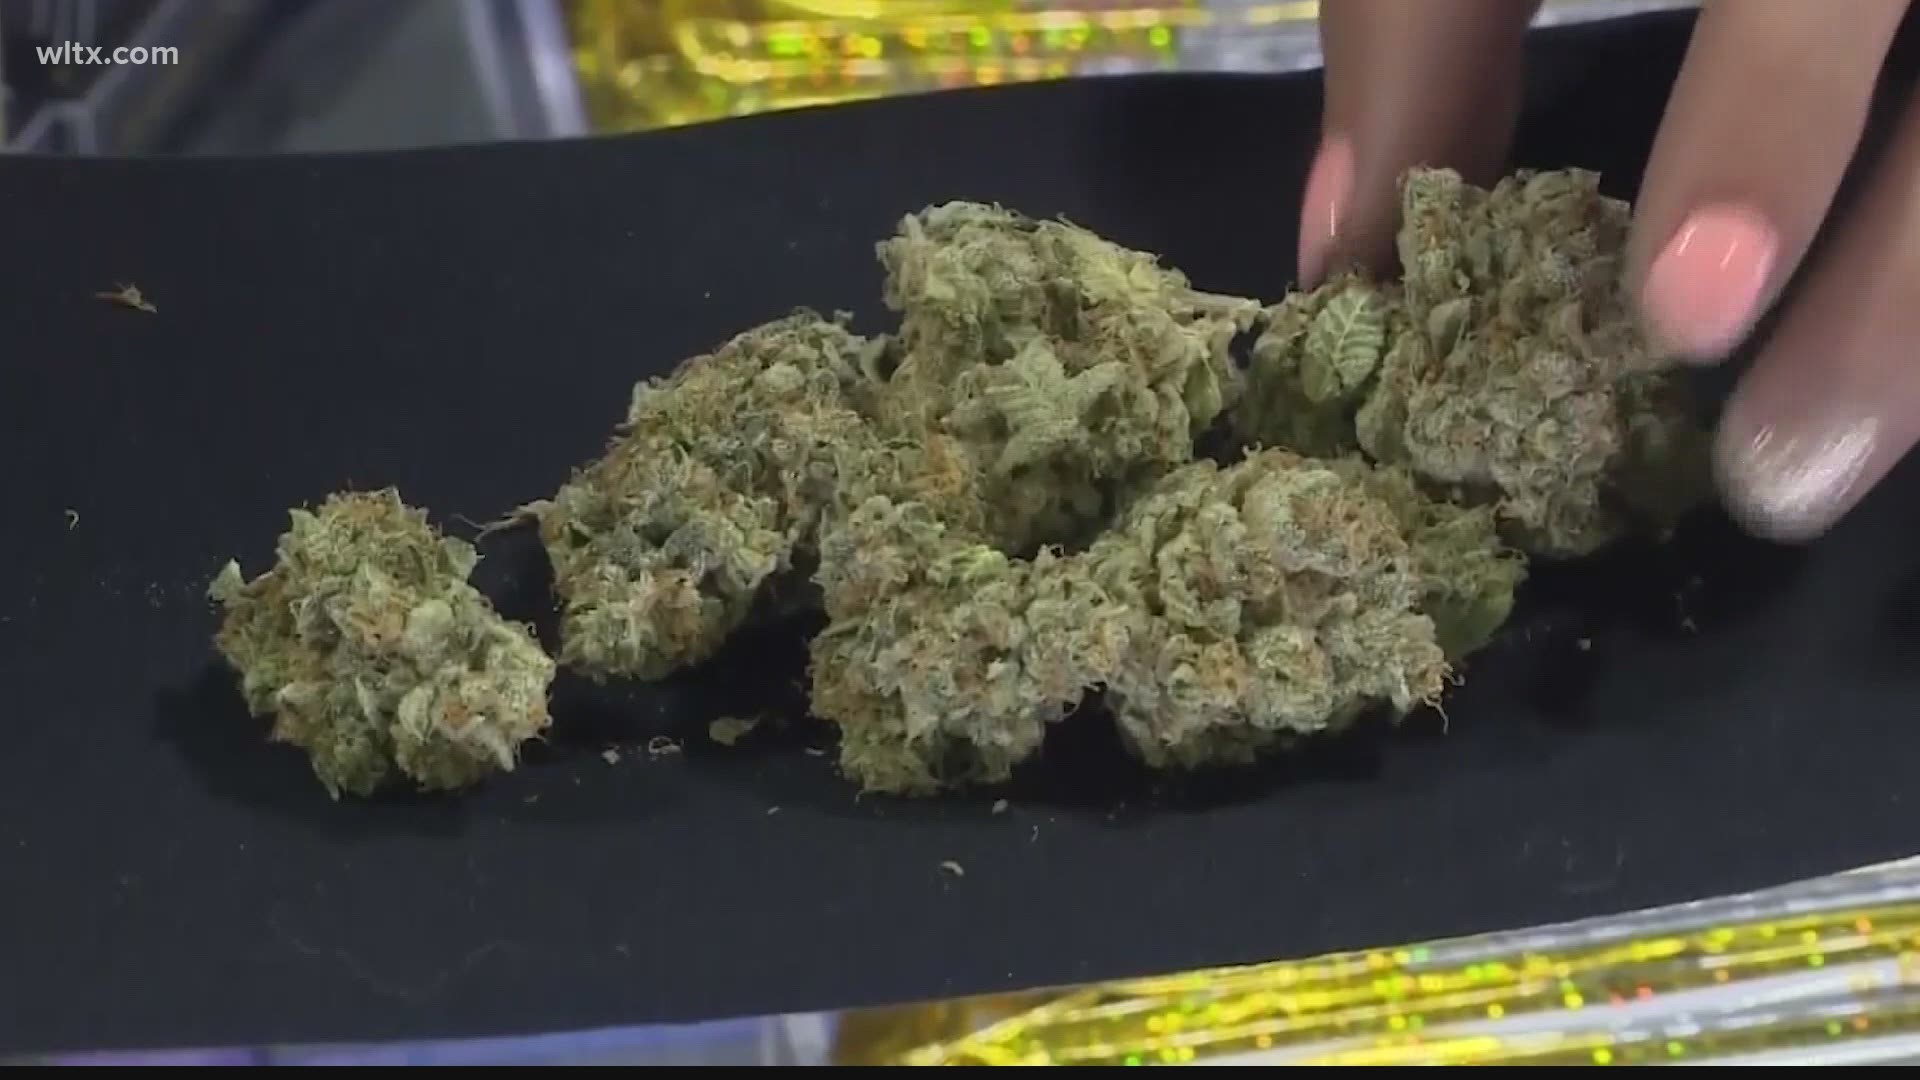 Medical marijuana law needed in South Carolina, group says | wltx.com